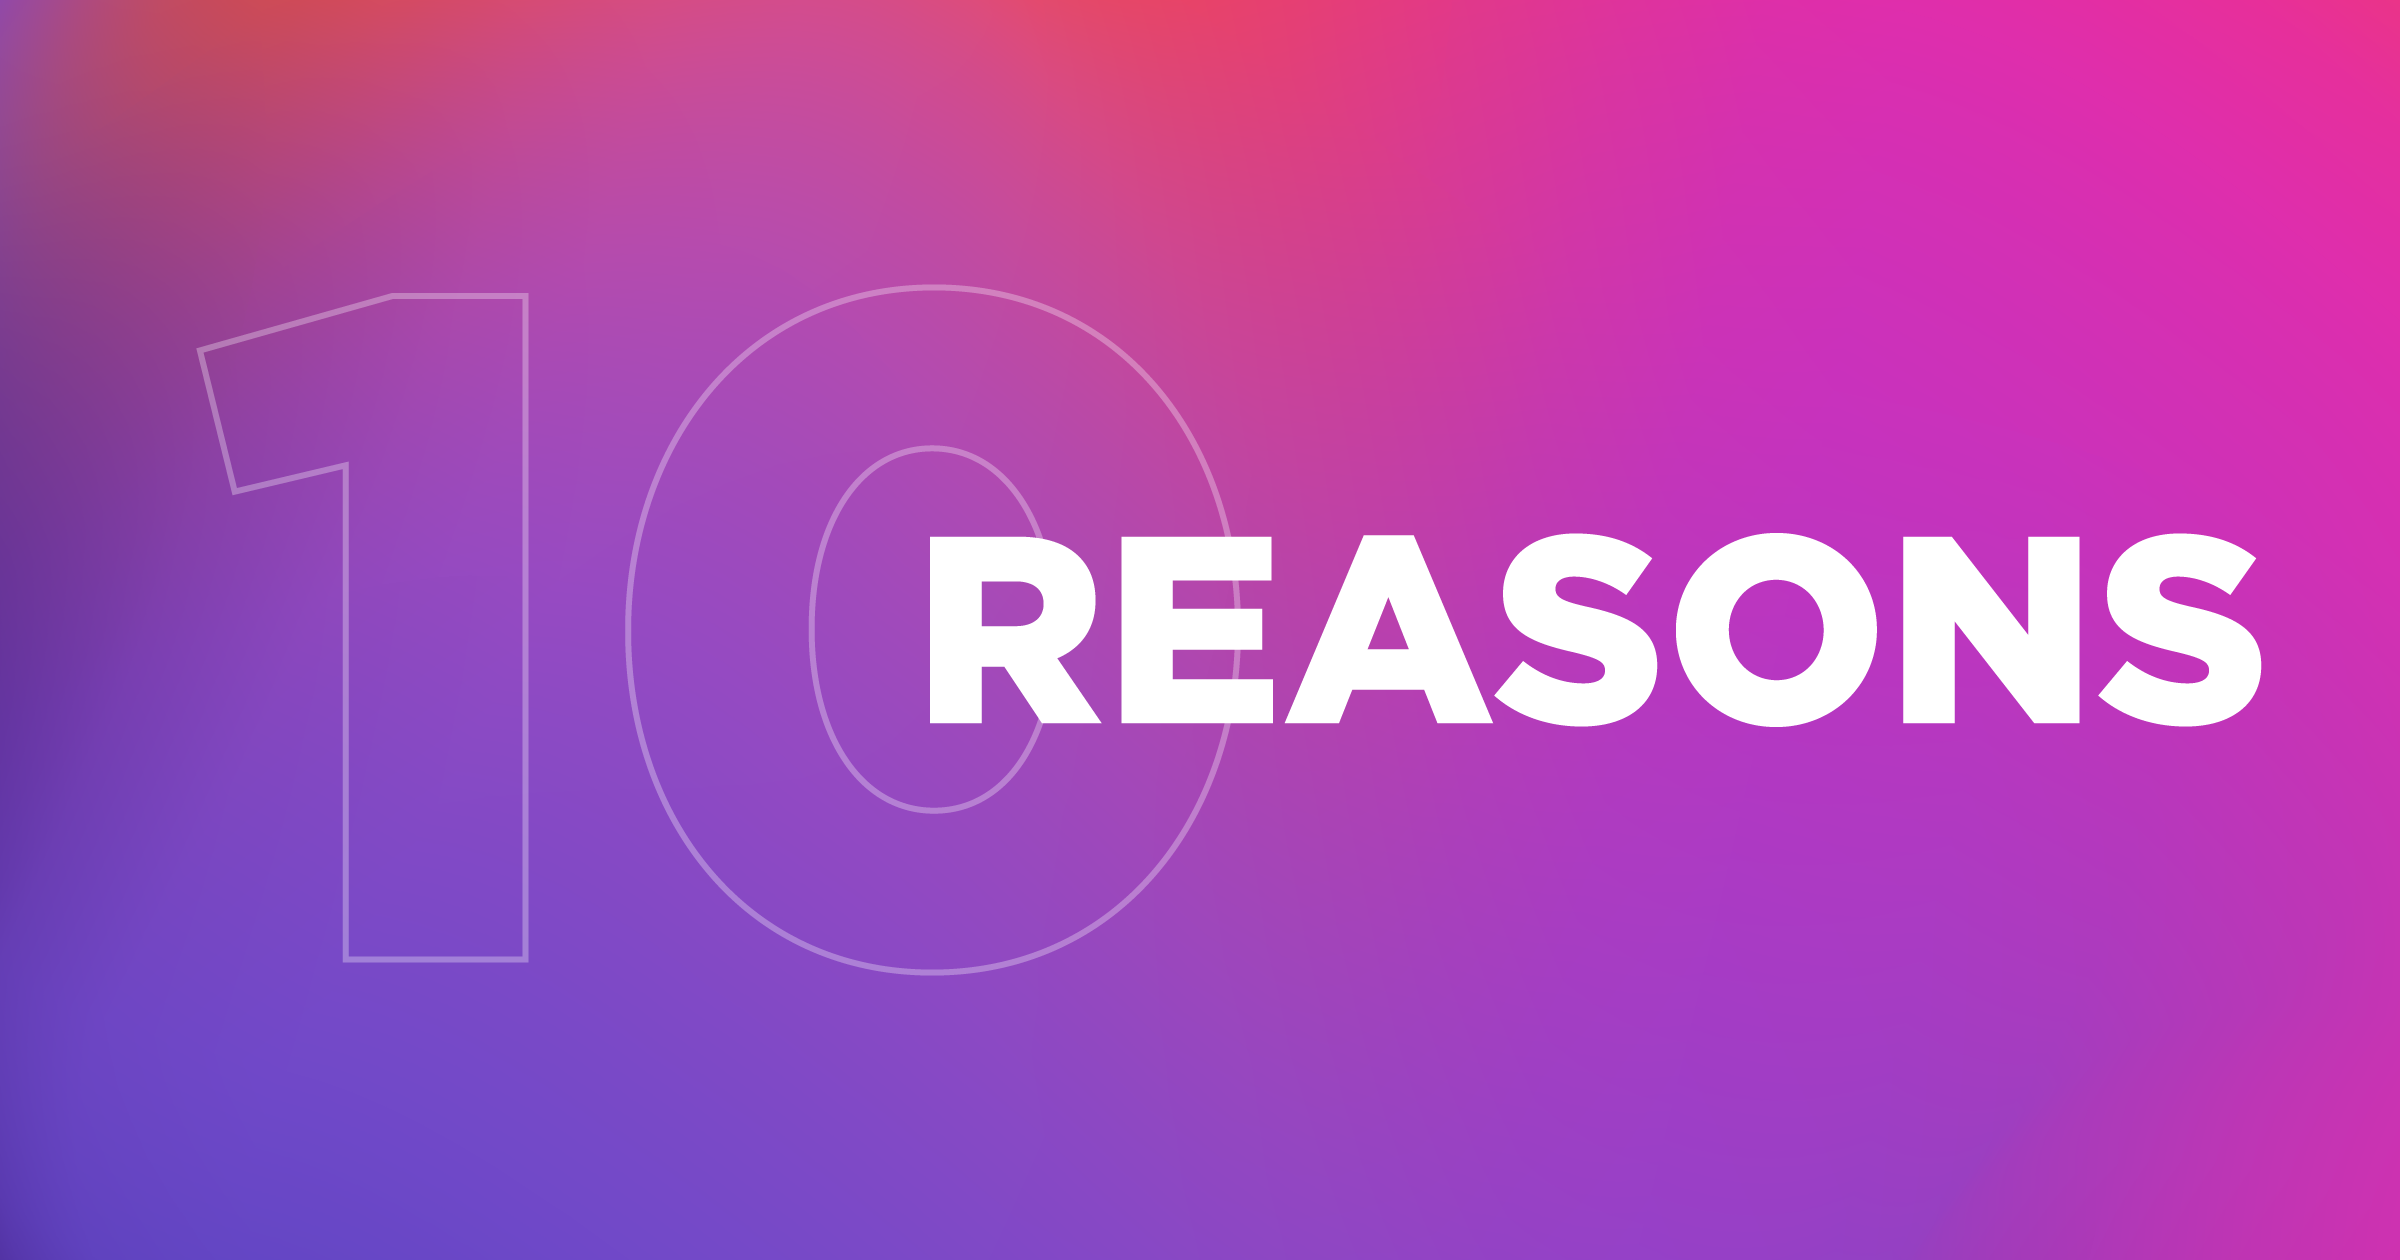 10 reasons on purple background